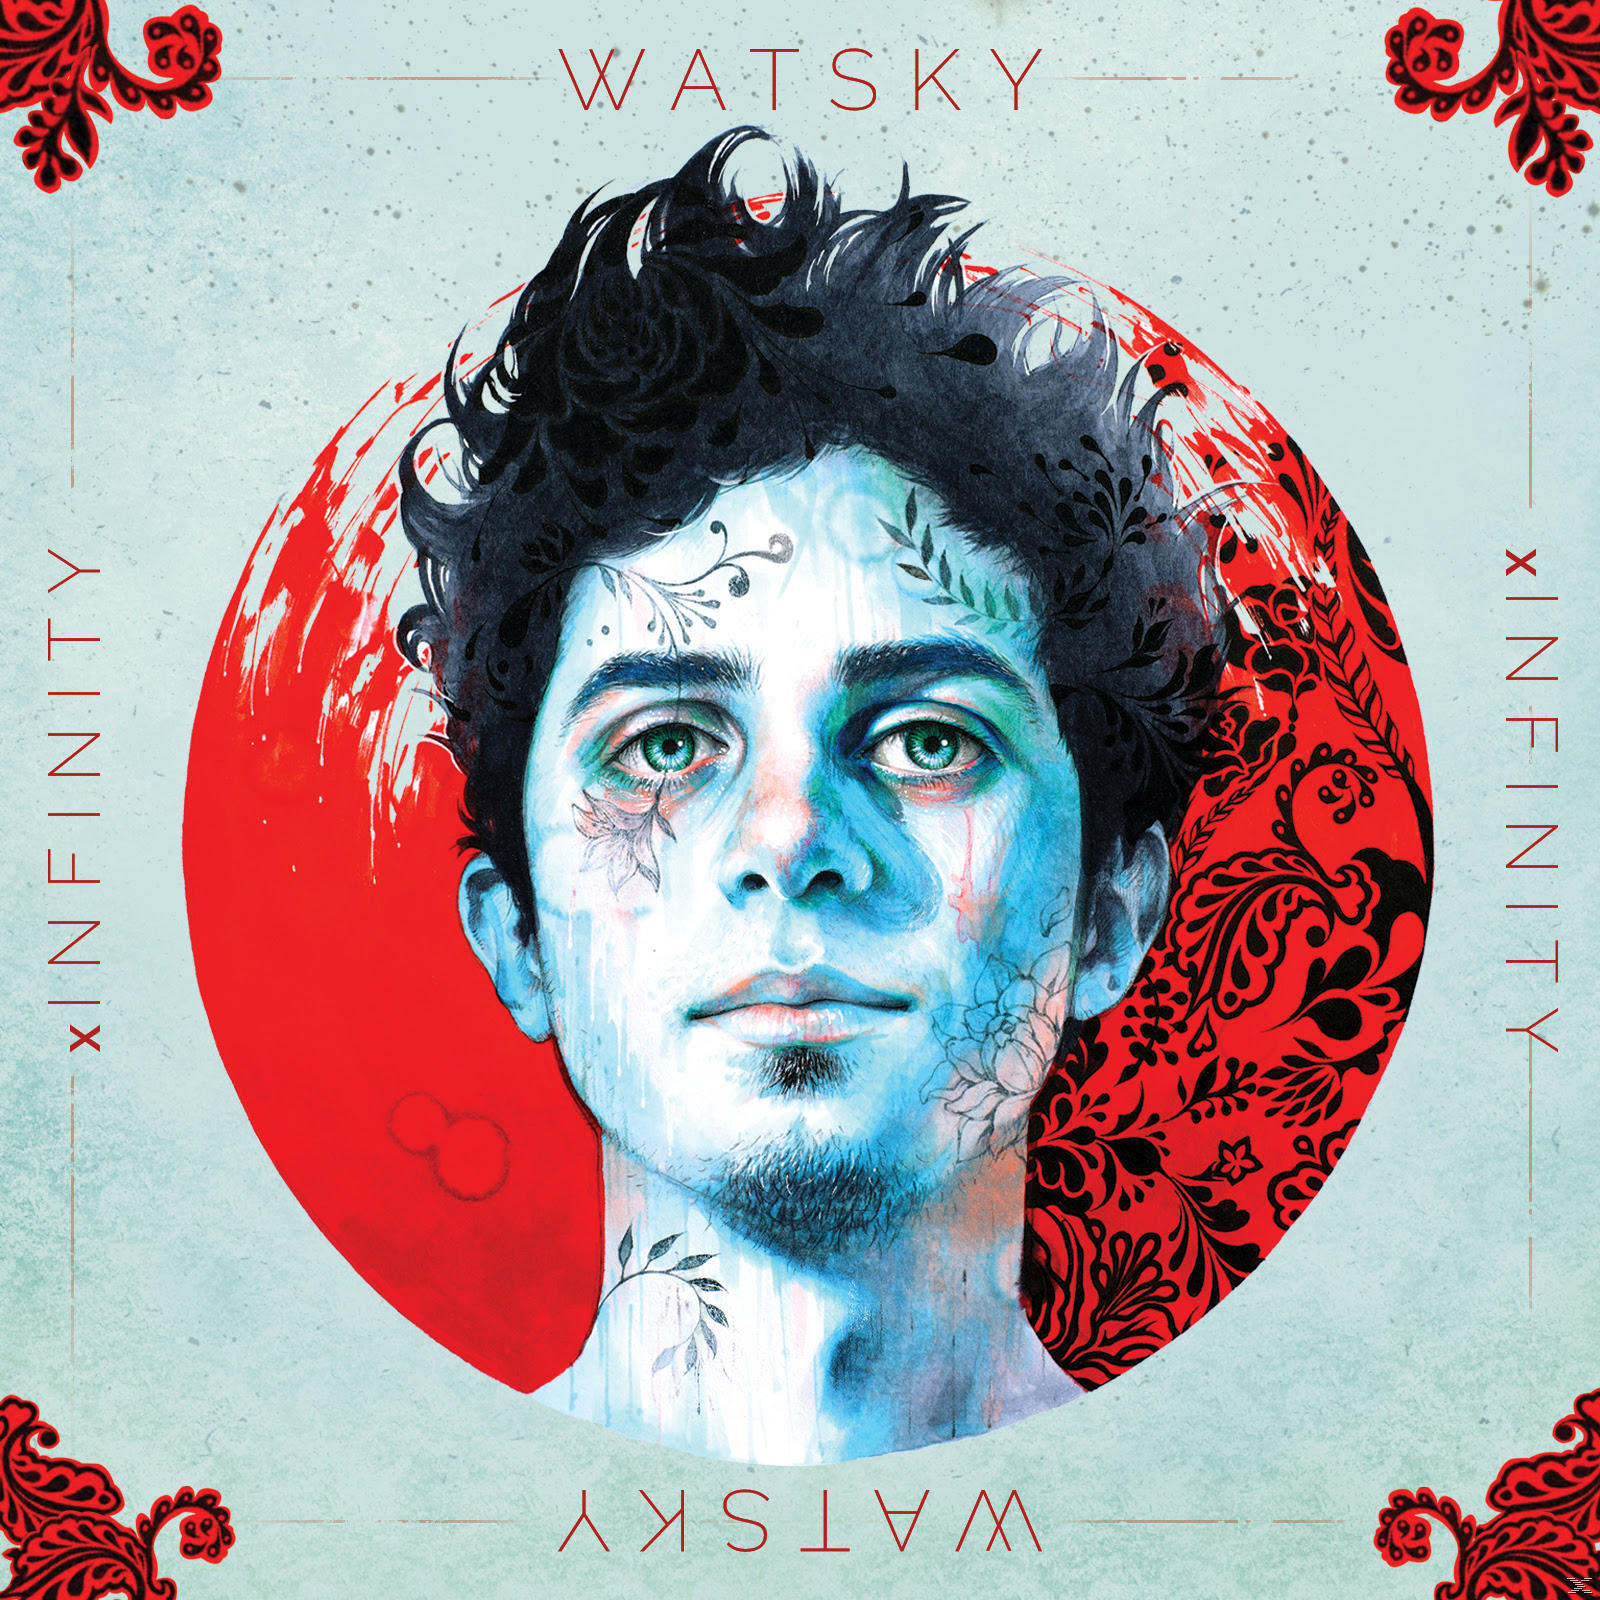 Watsky - X Infinity (CD) 